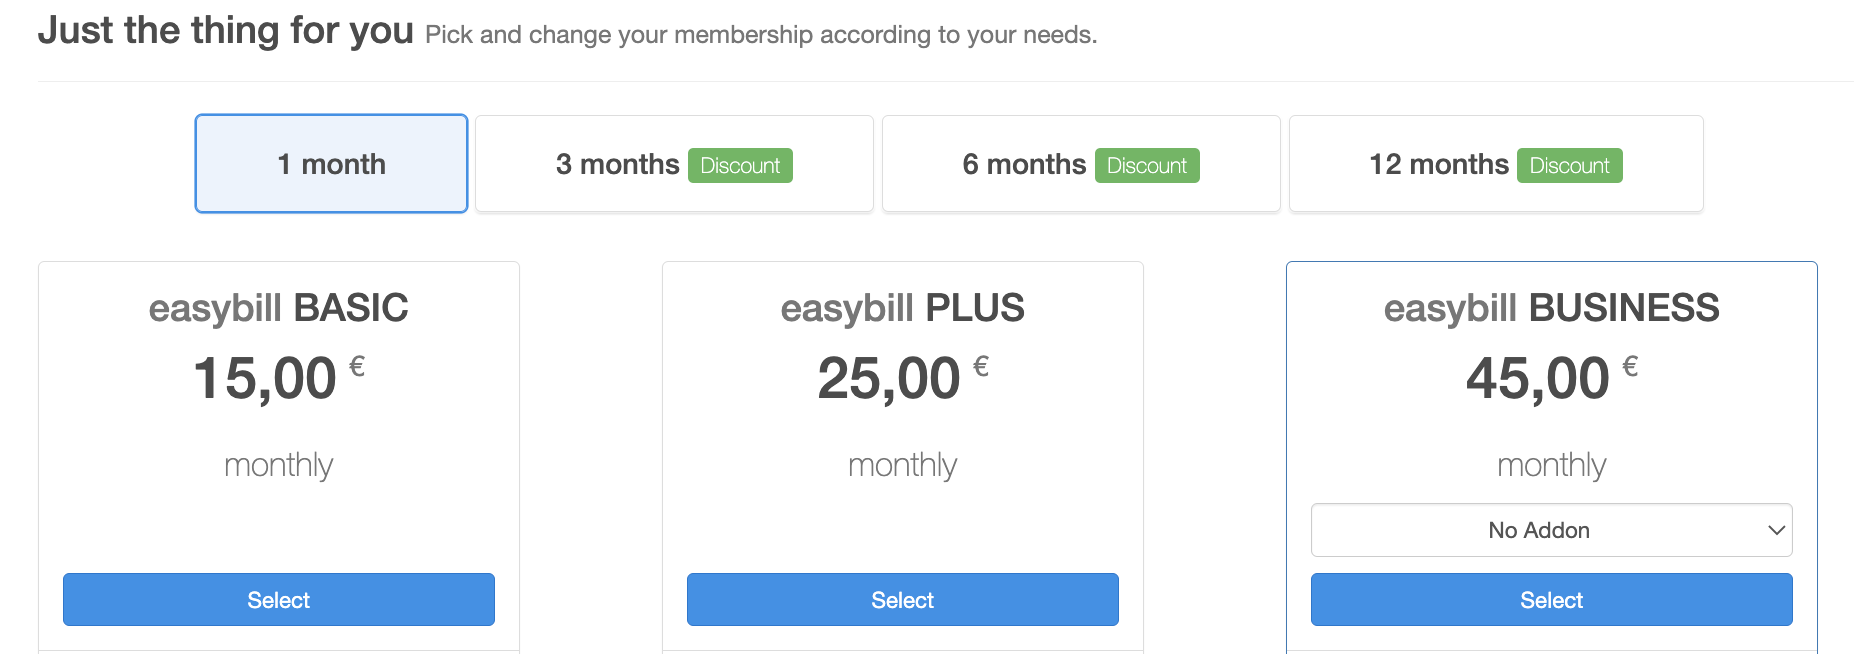 easybill_memberships.png